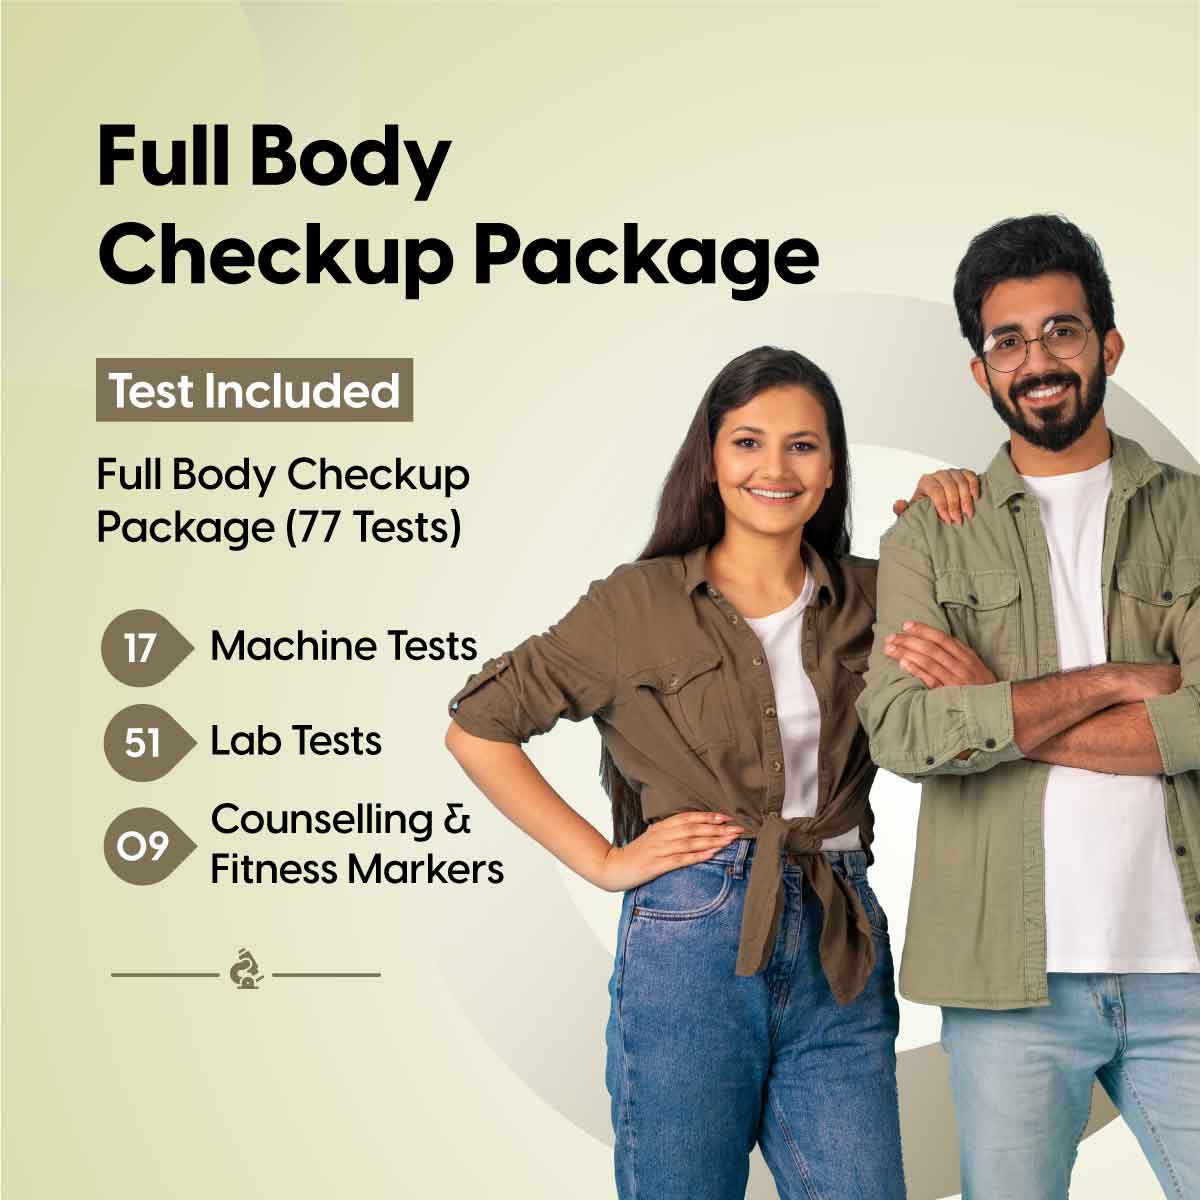 Full Body Checkup Package